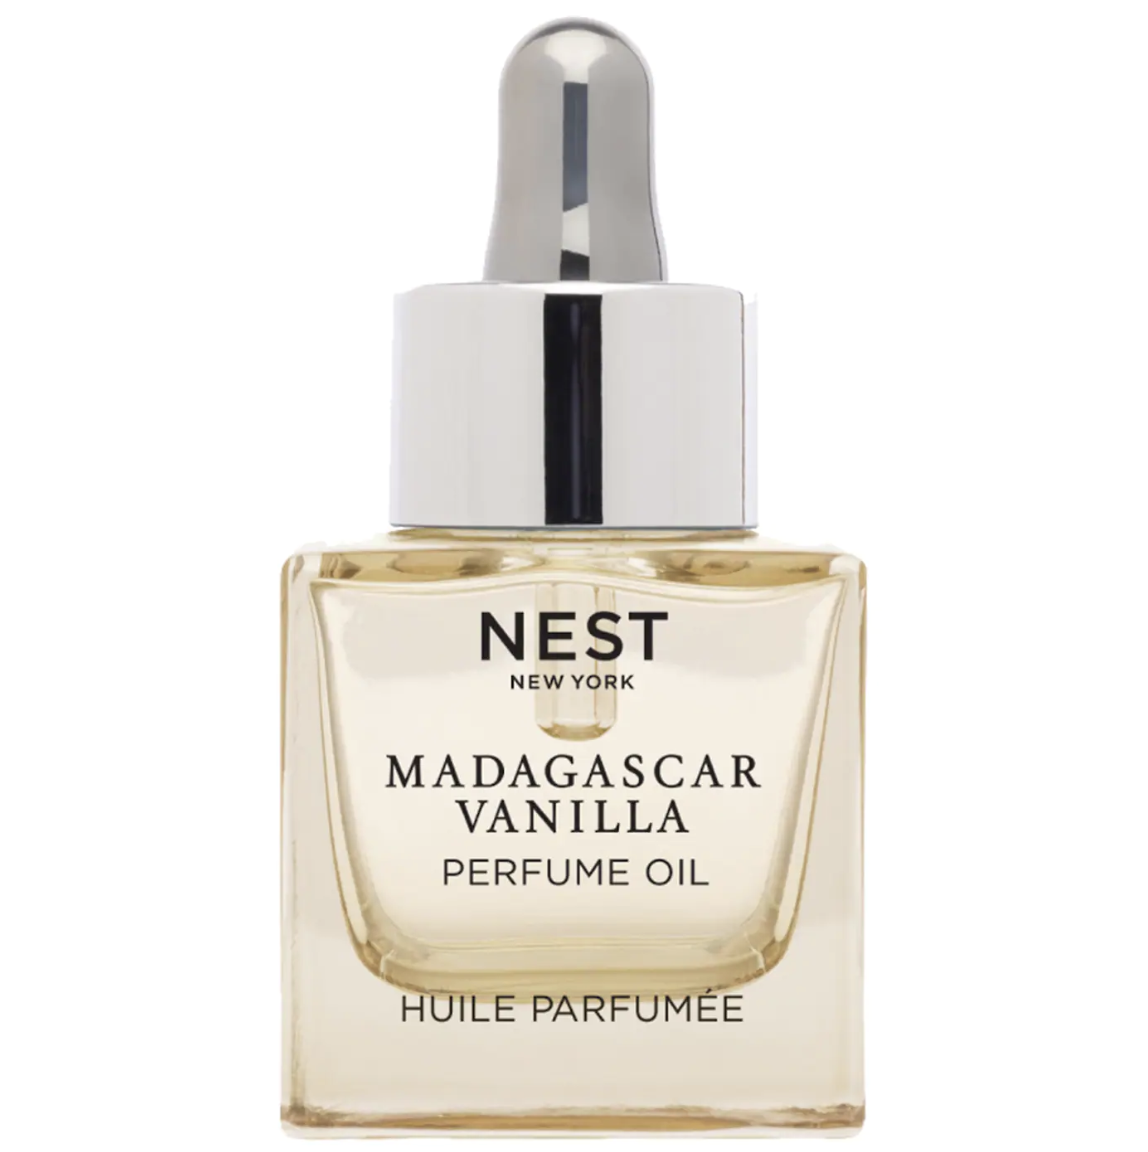 Madagascar Vanilla Perfume Oil